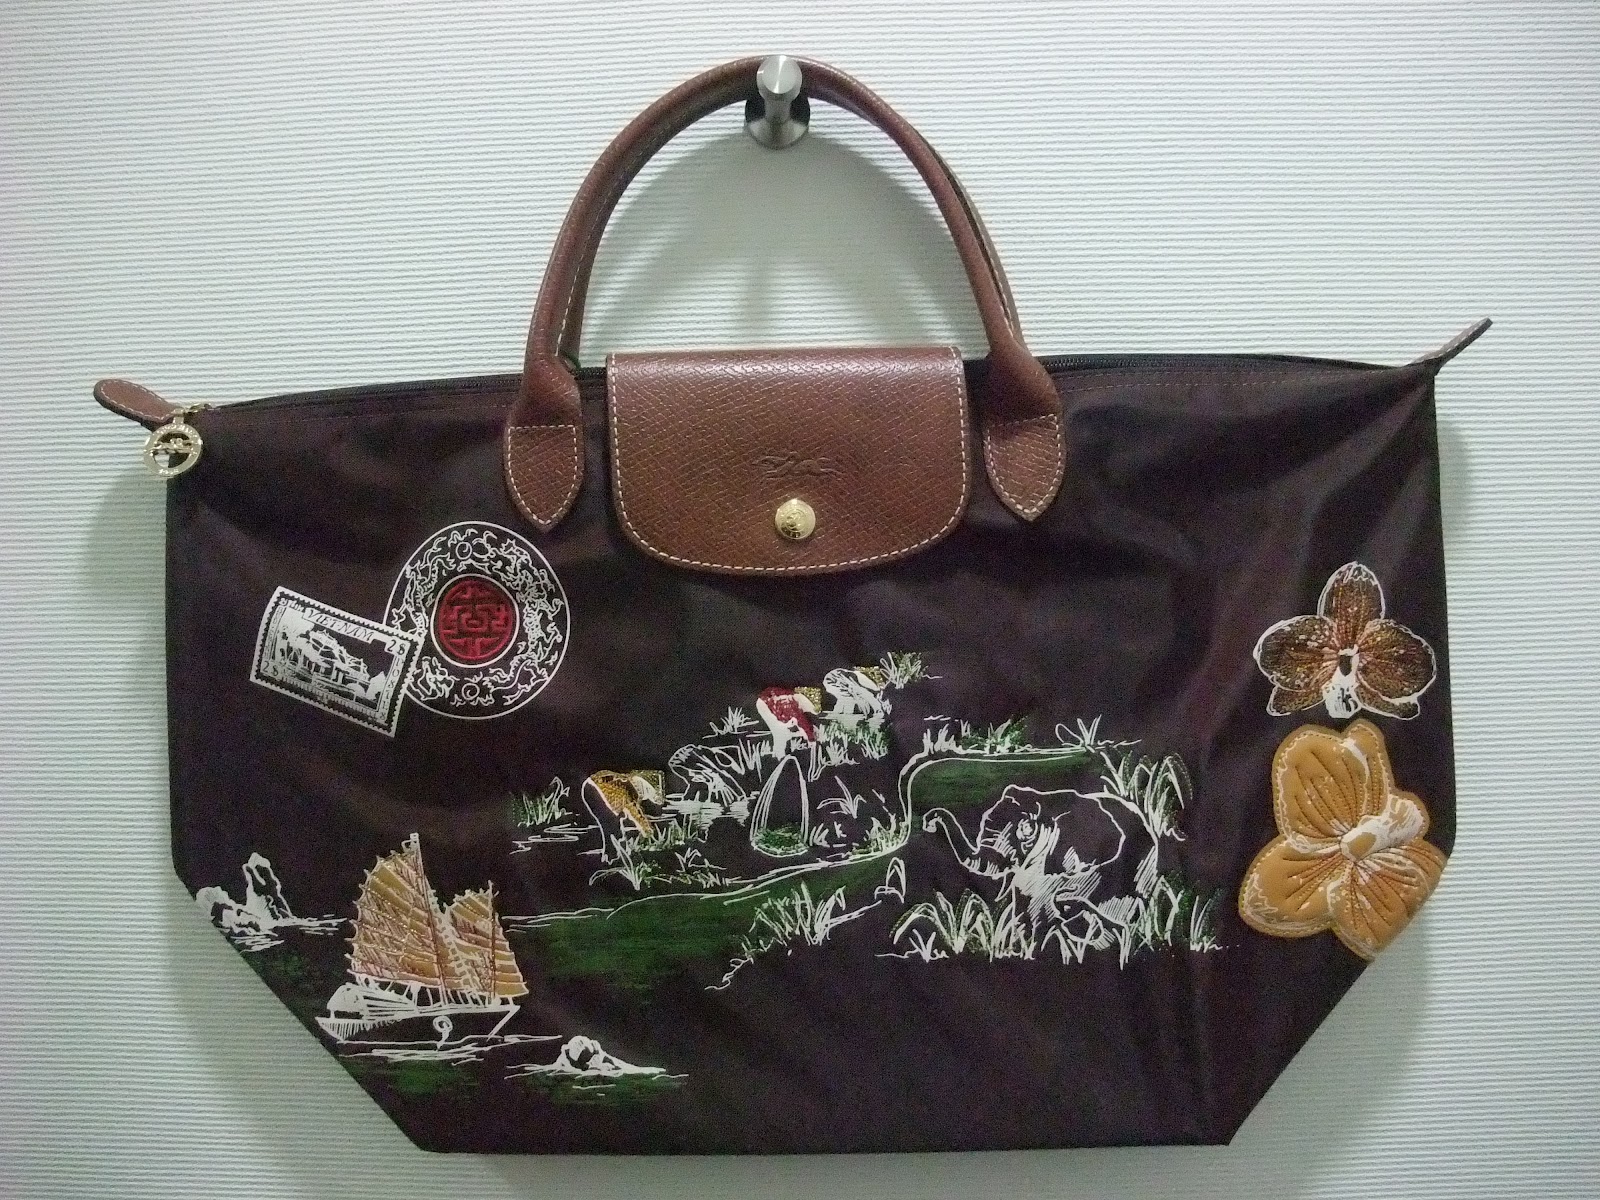 Authentic Longchamp Bags for Sale